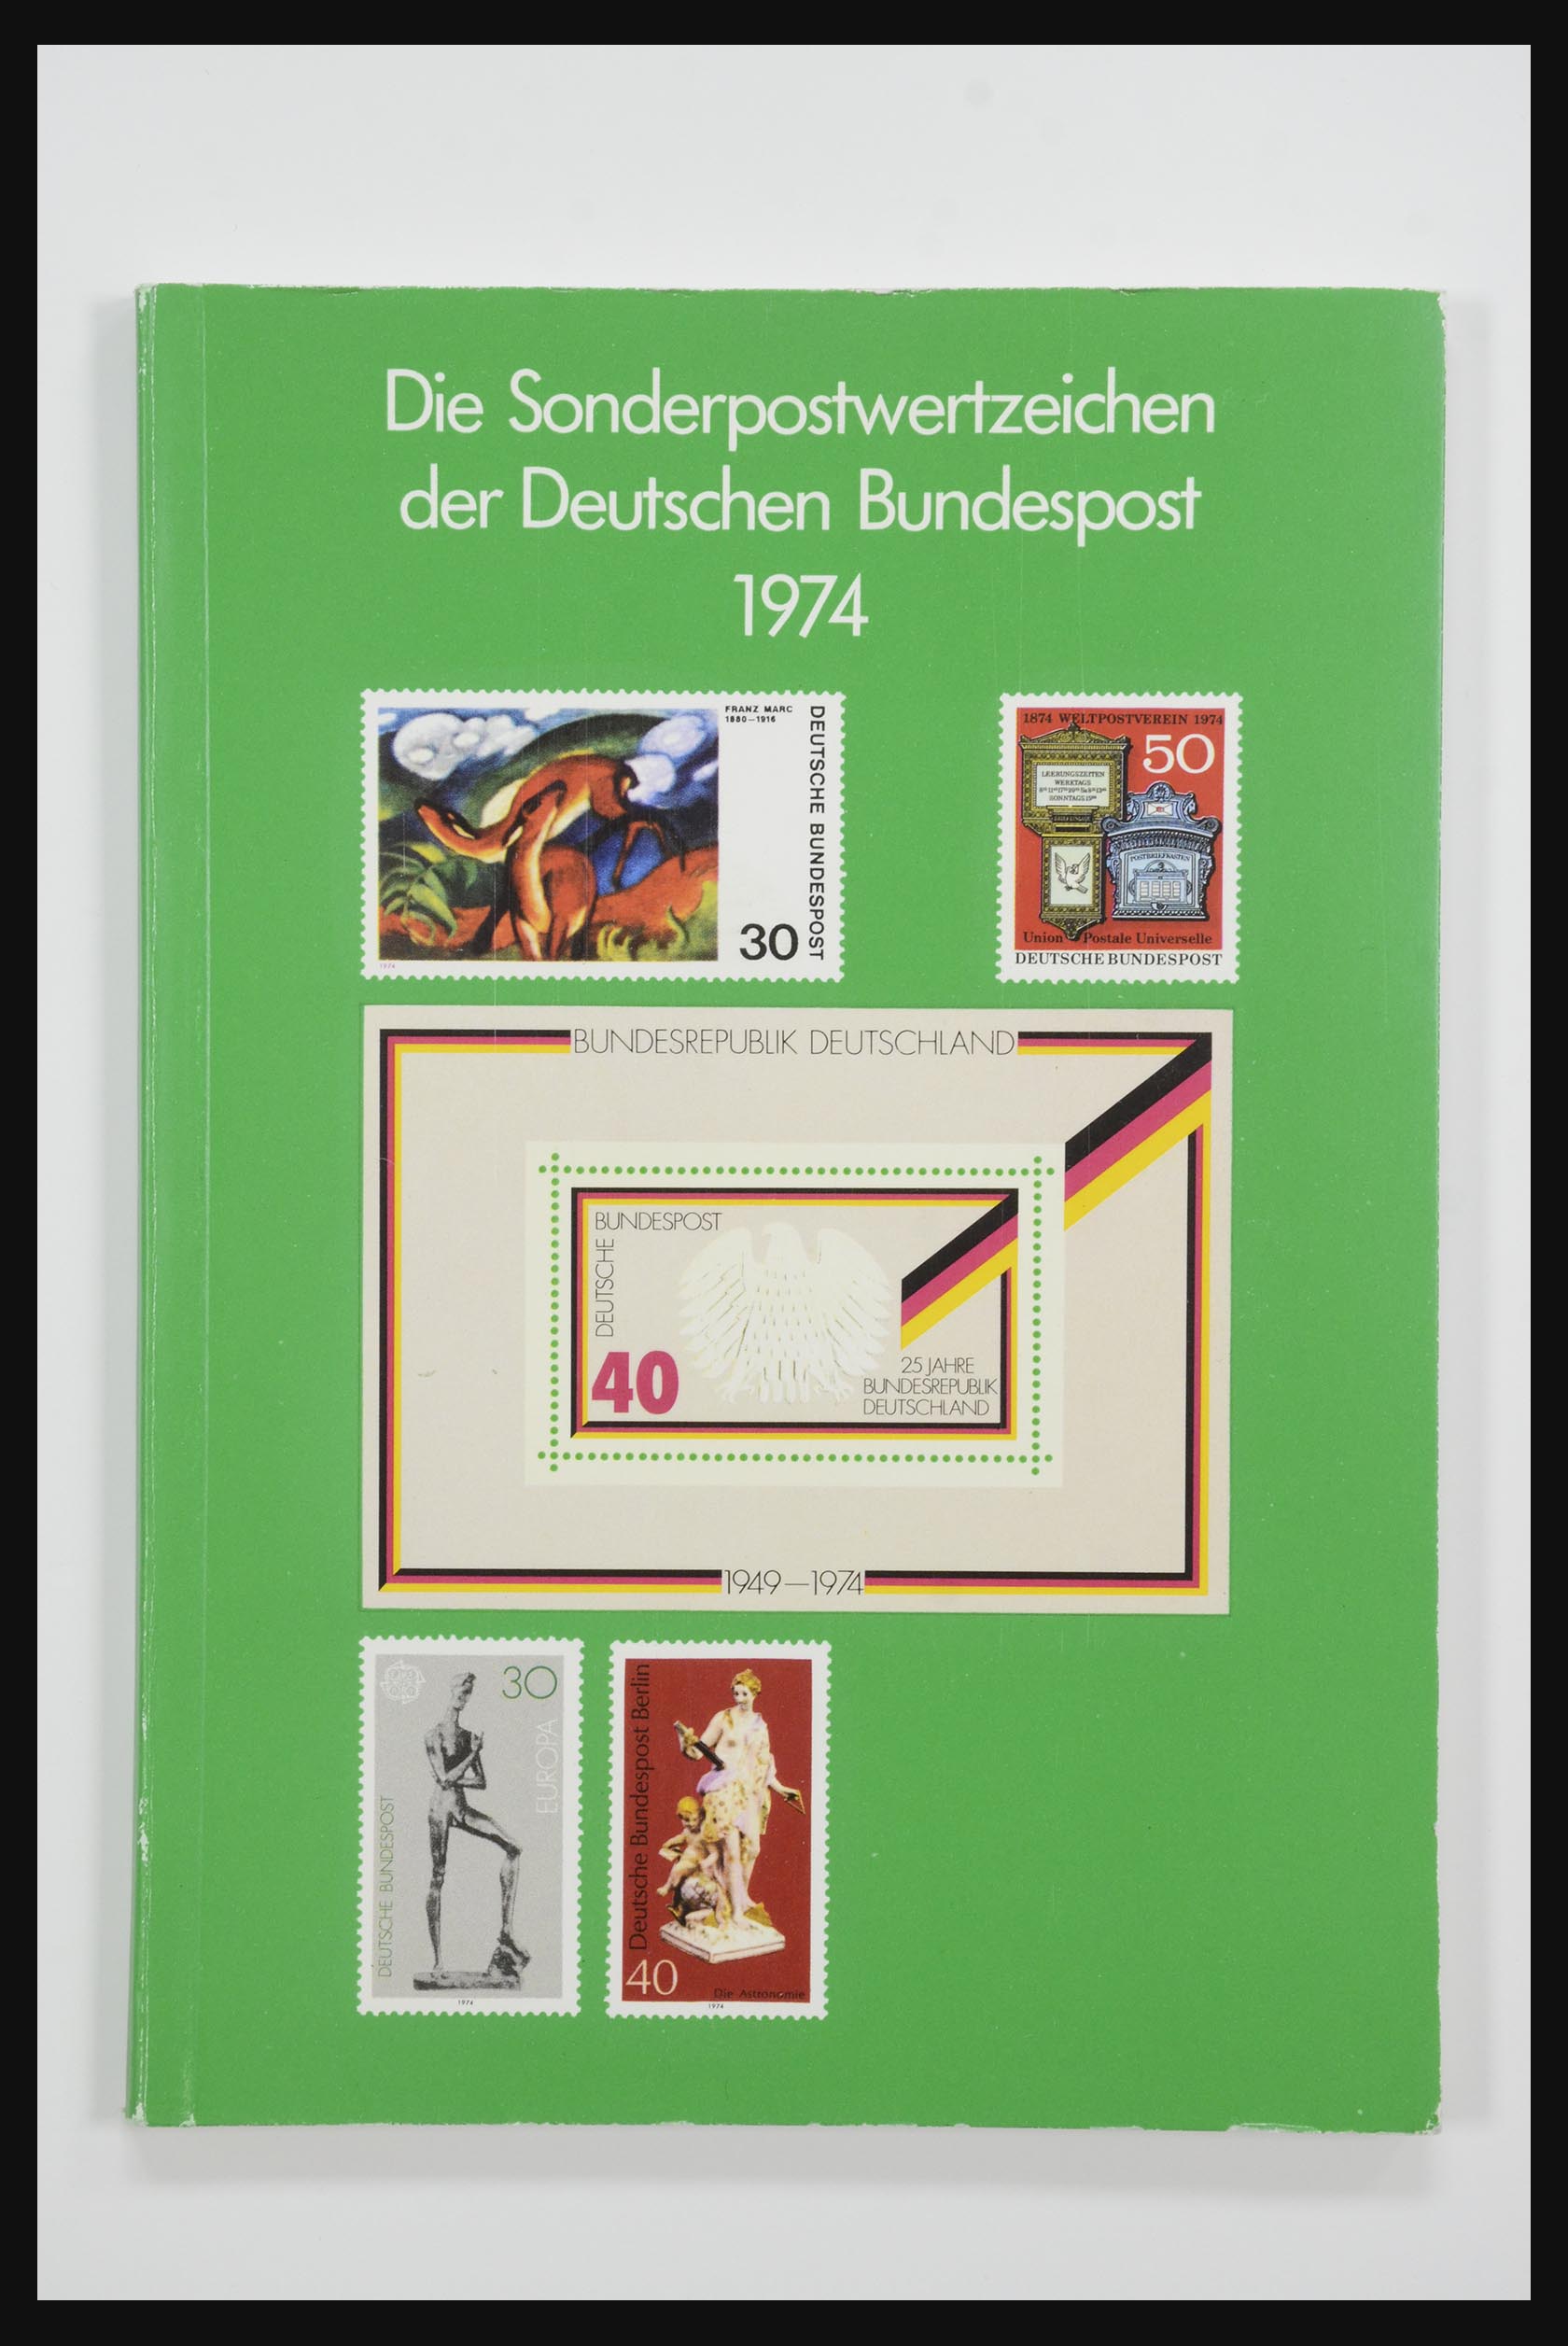 31836 002 - 31836 Bundespost yearbooks 1974-1999.